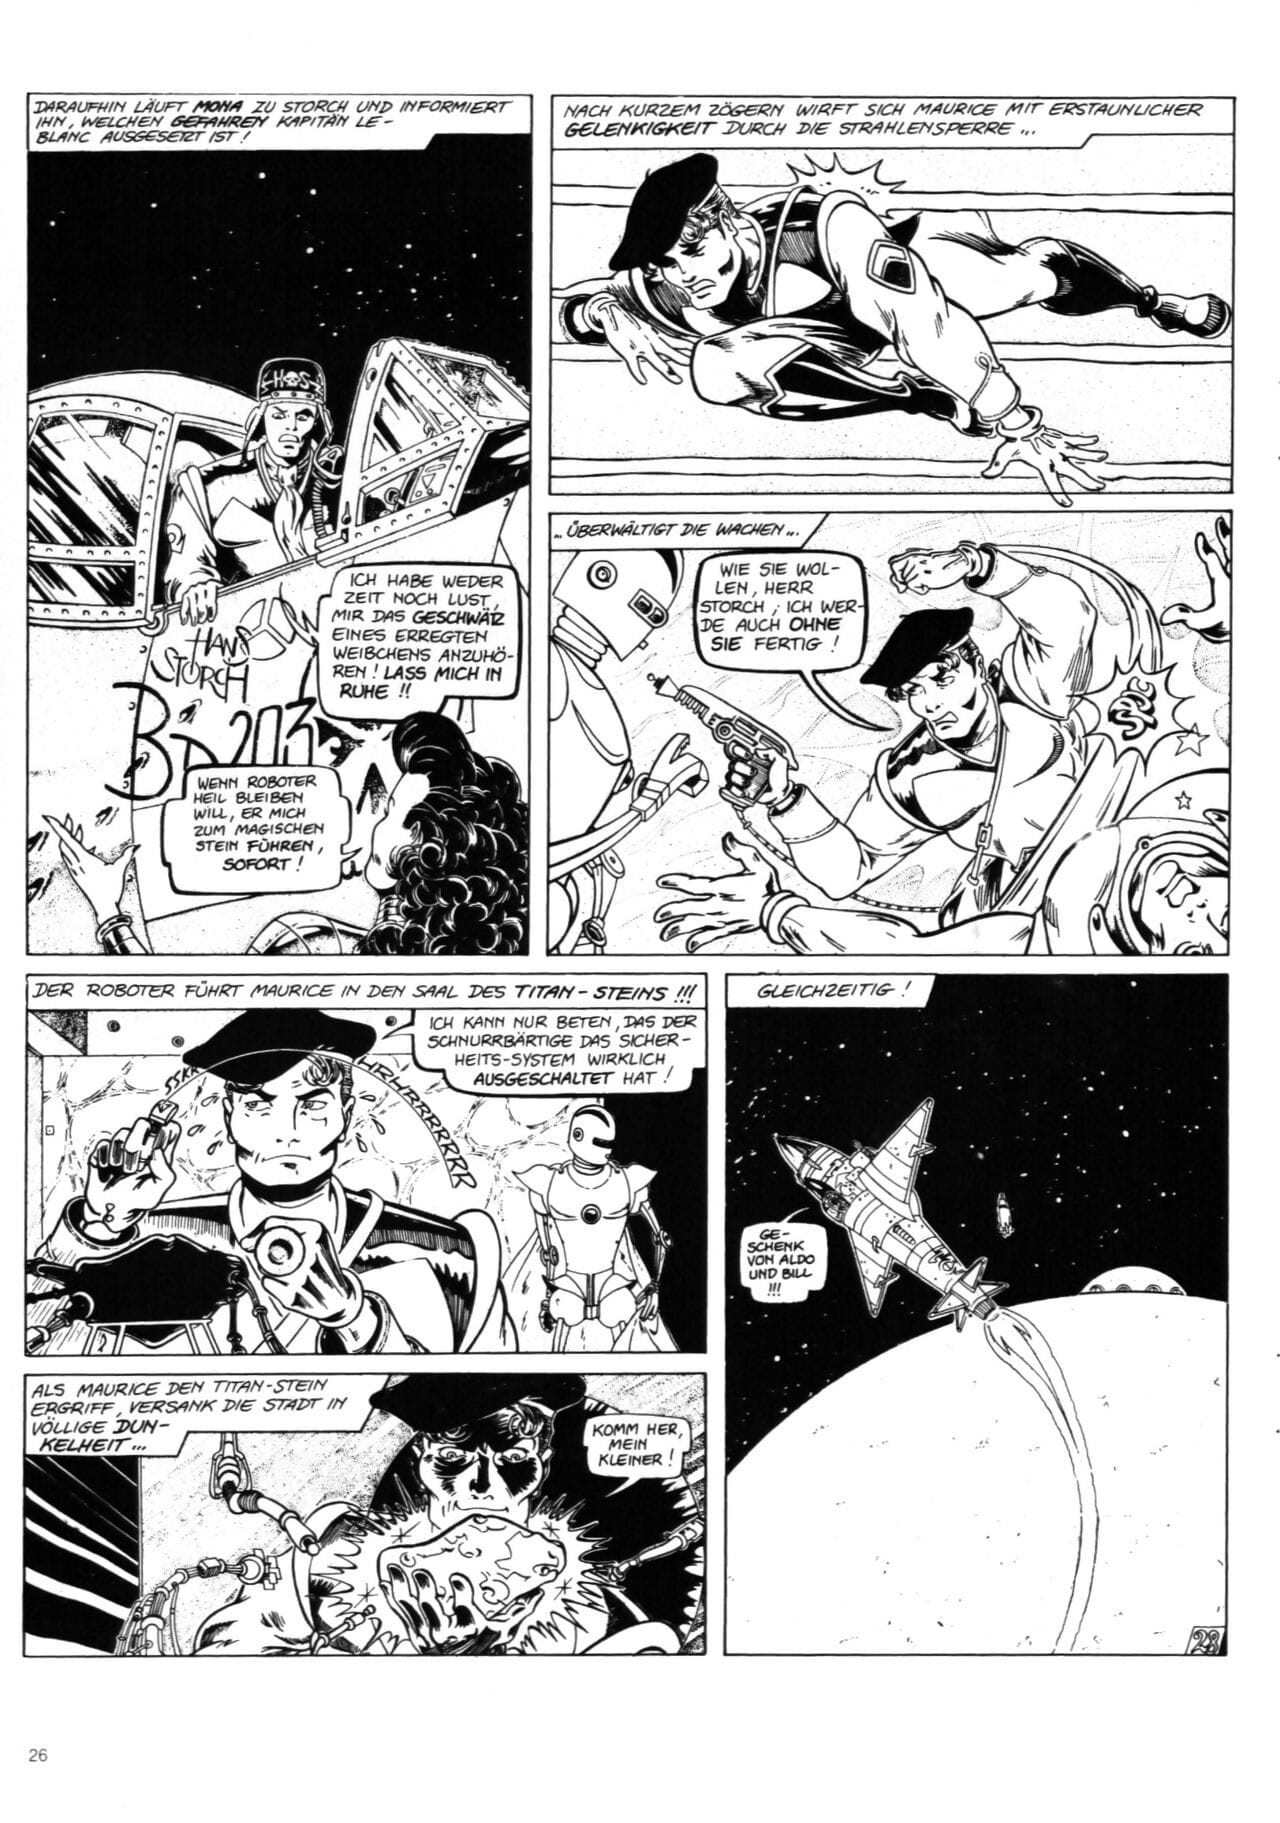 schwermetall #030 PART 2 page 1